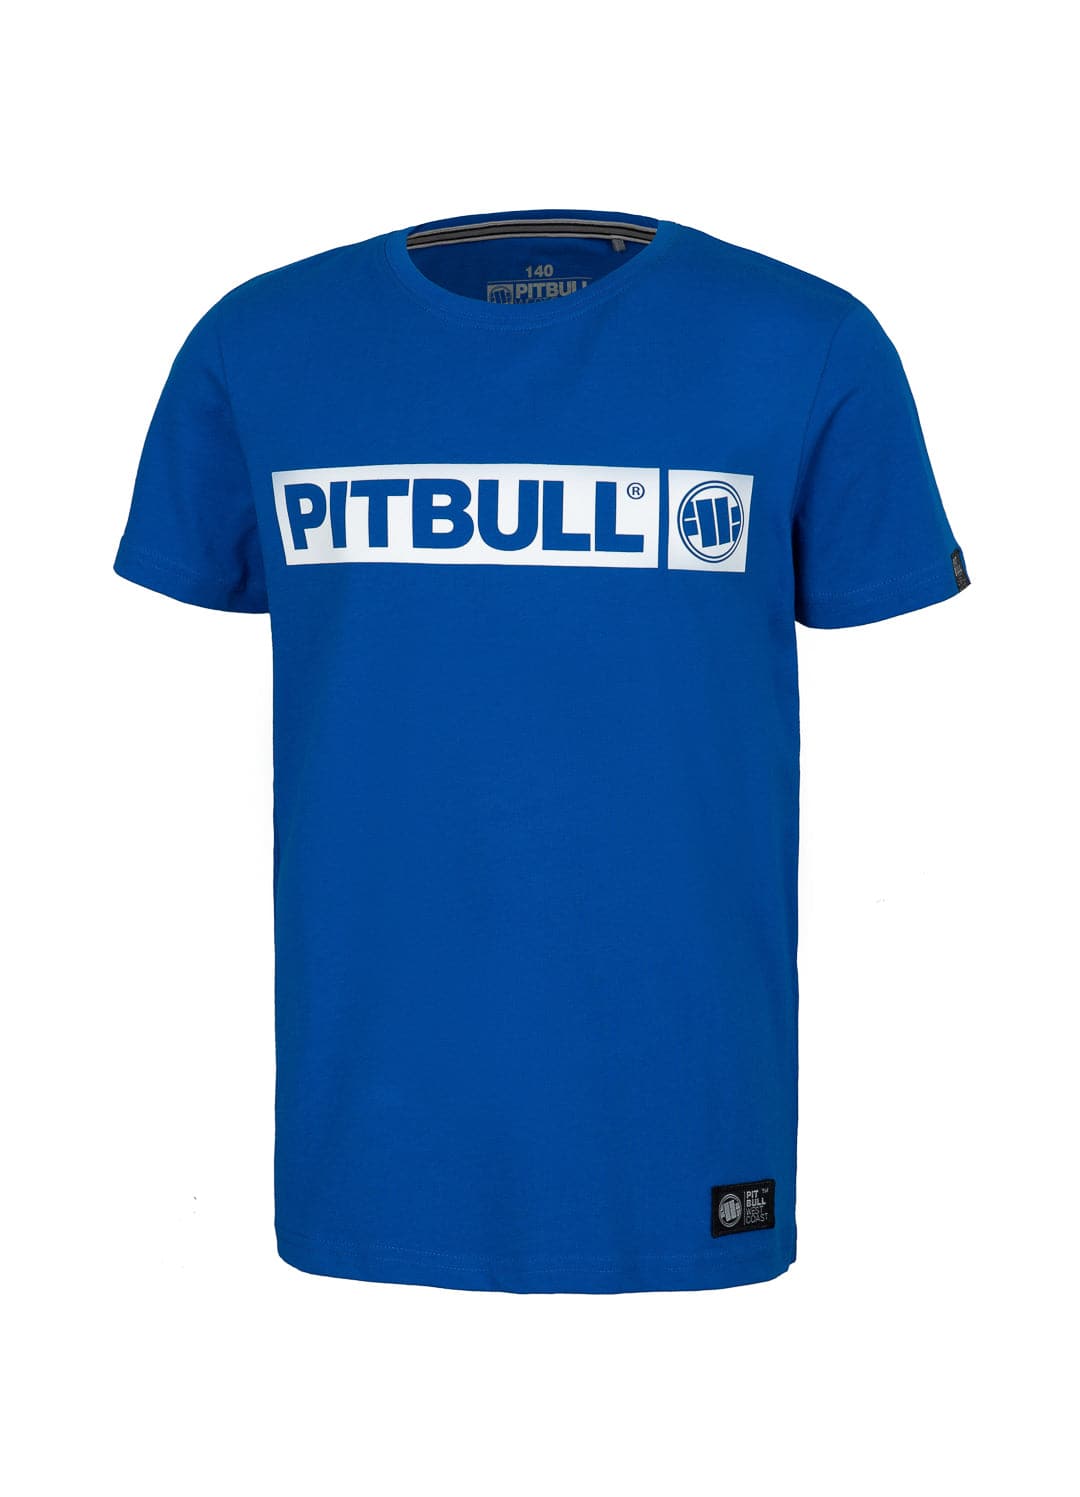 HILLTOP kids blue t-shirt - Pitbull West Coast International Store 